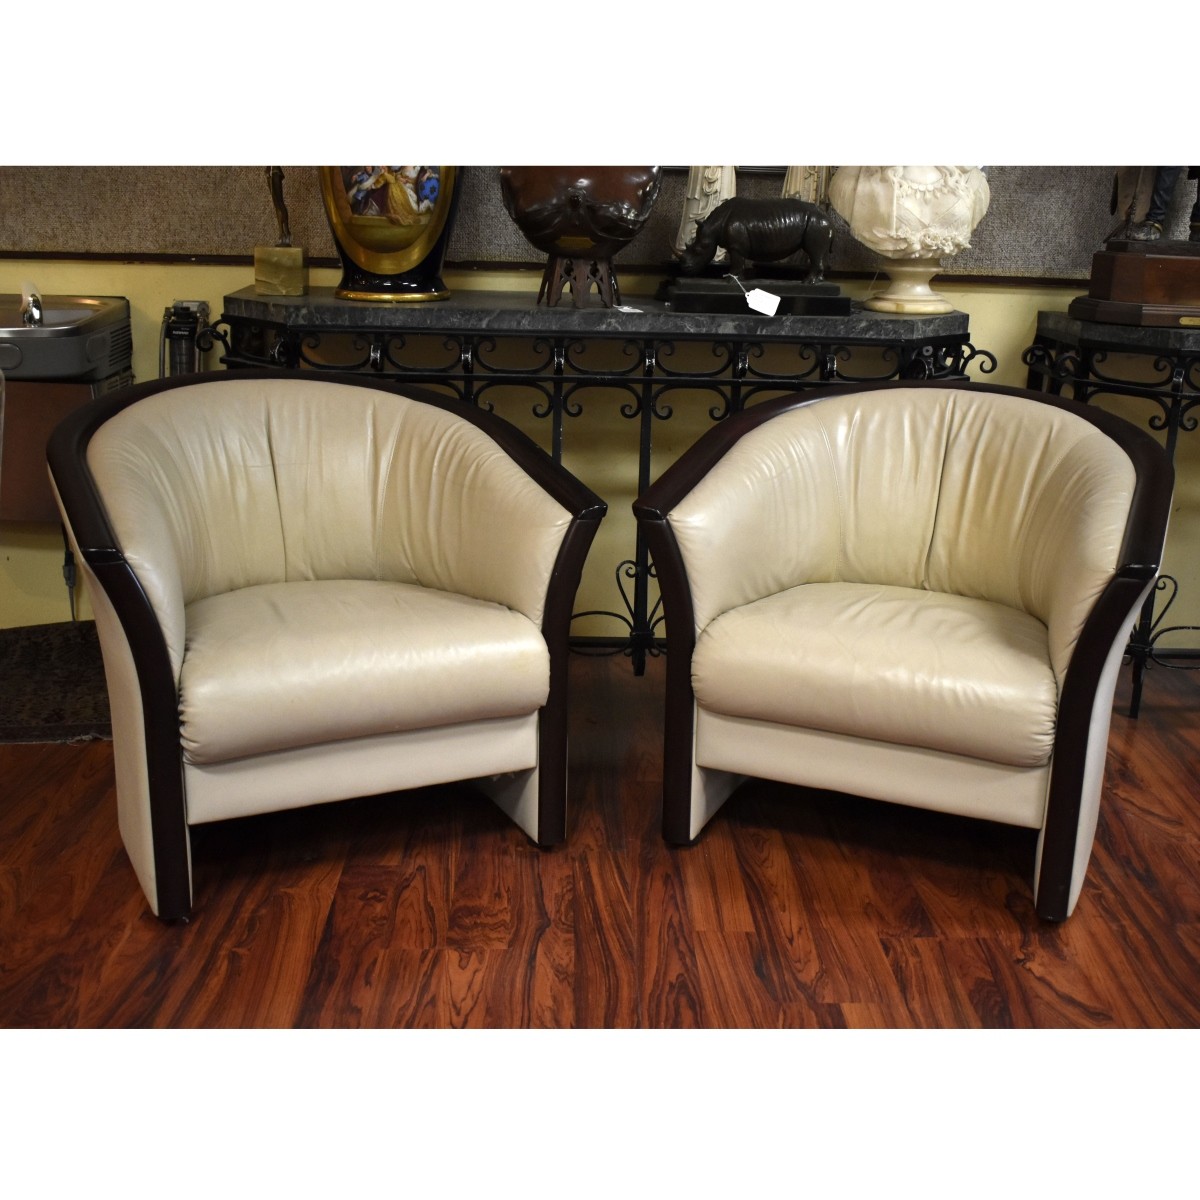 Pair of Ekornos Lounge Chairs